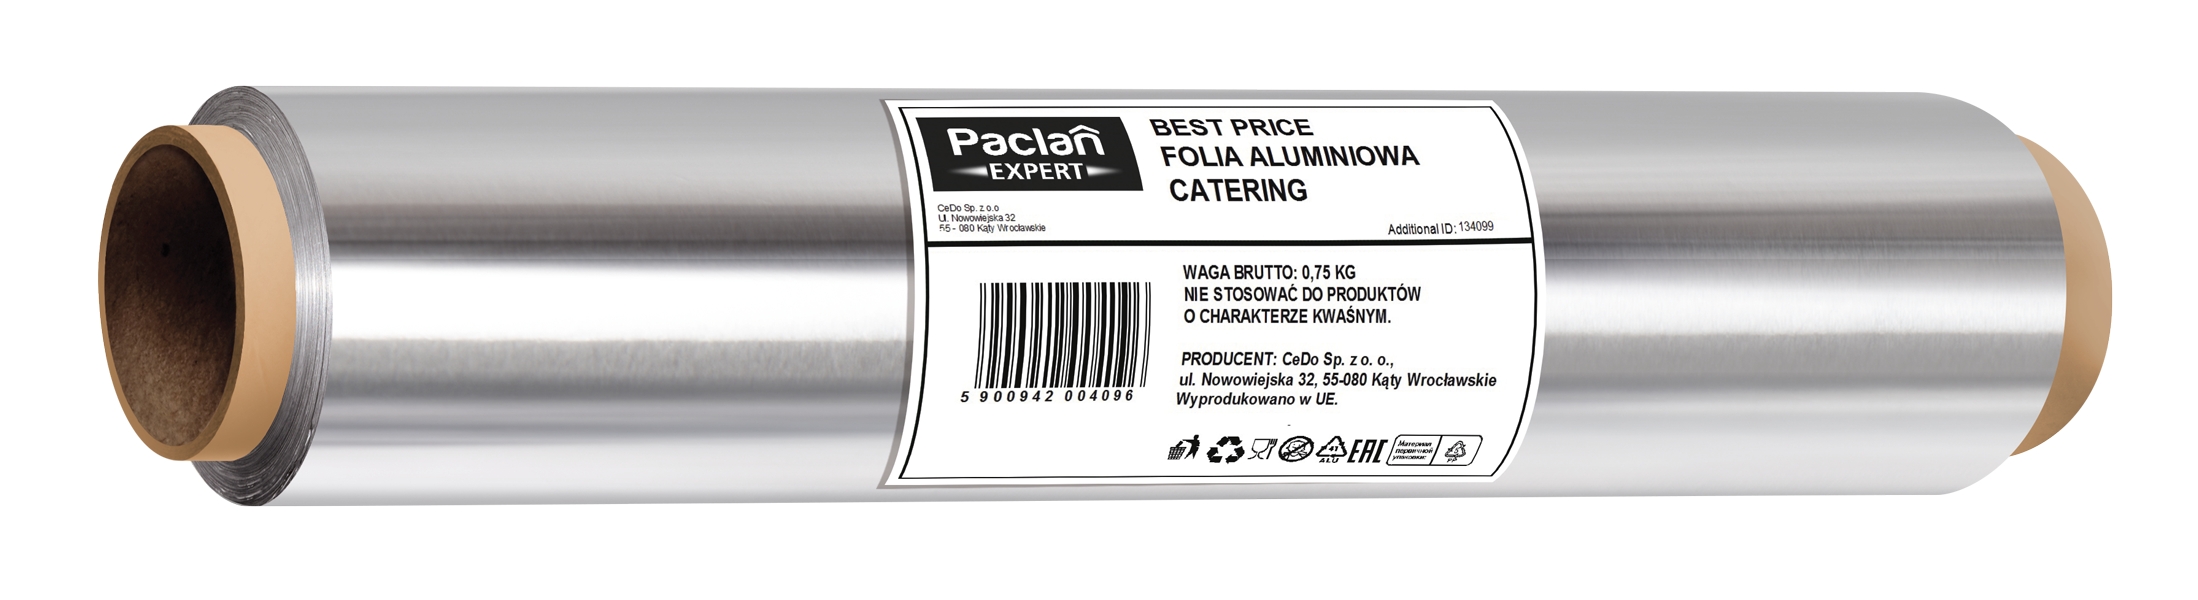 Paclan Expert, Folia aluminiowa 60m (134099)